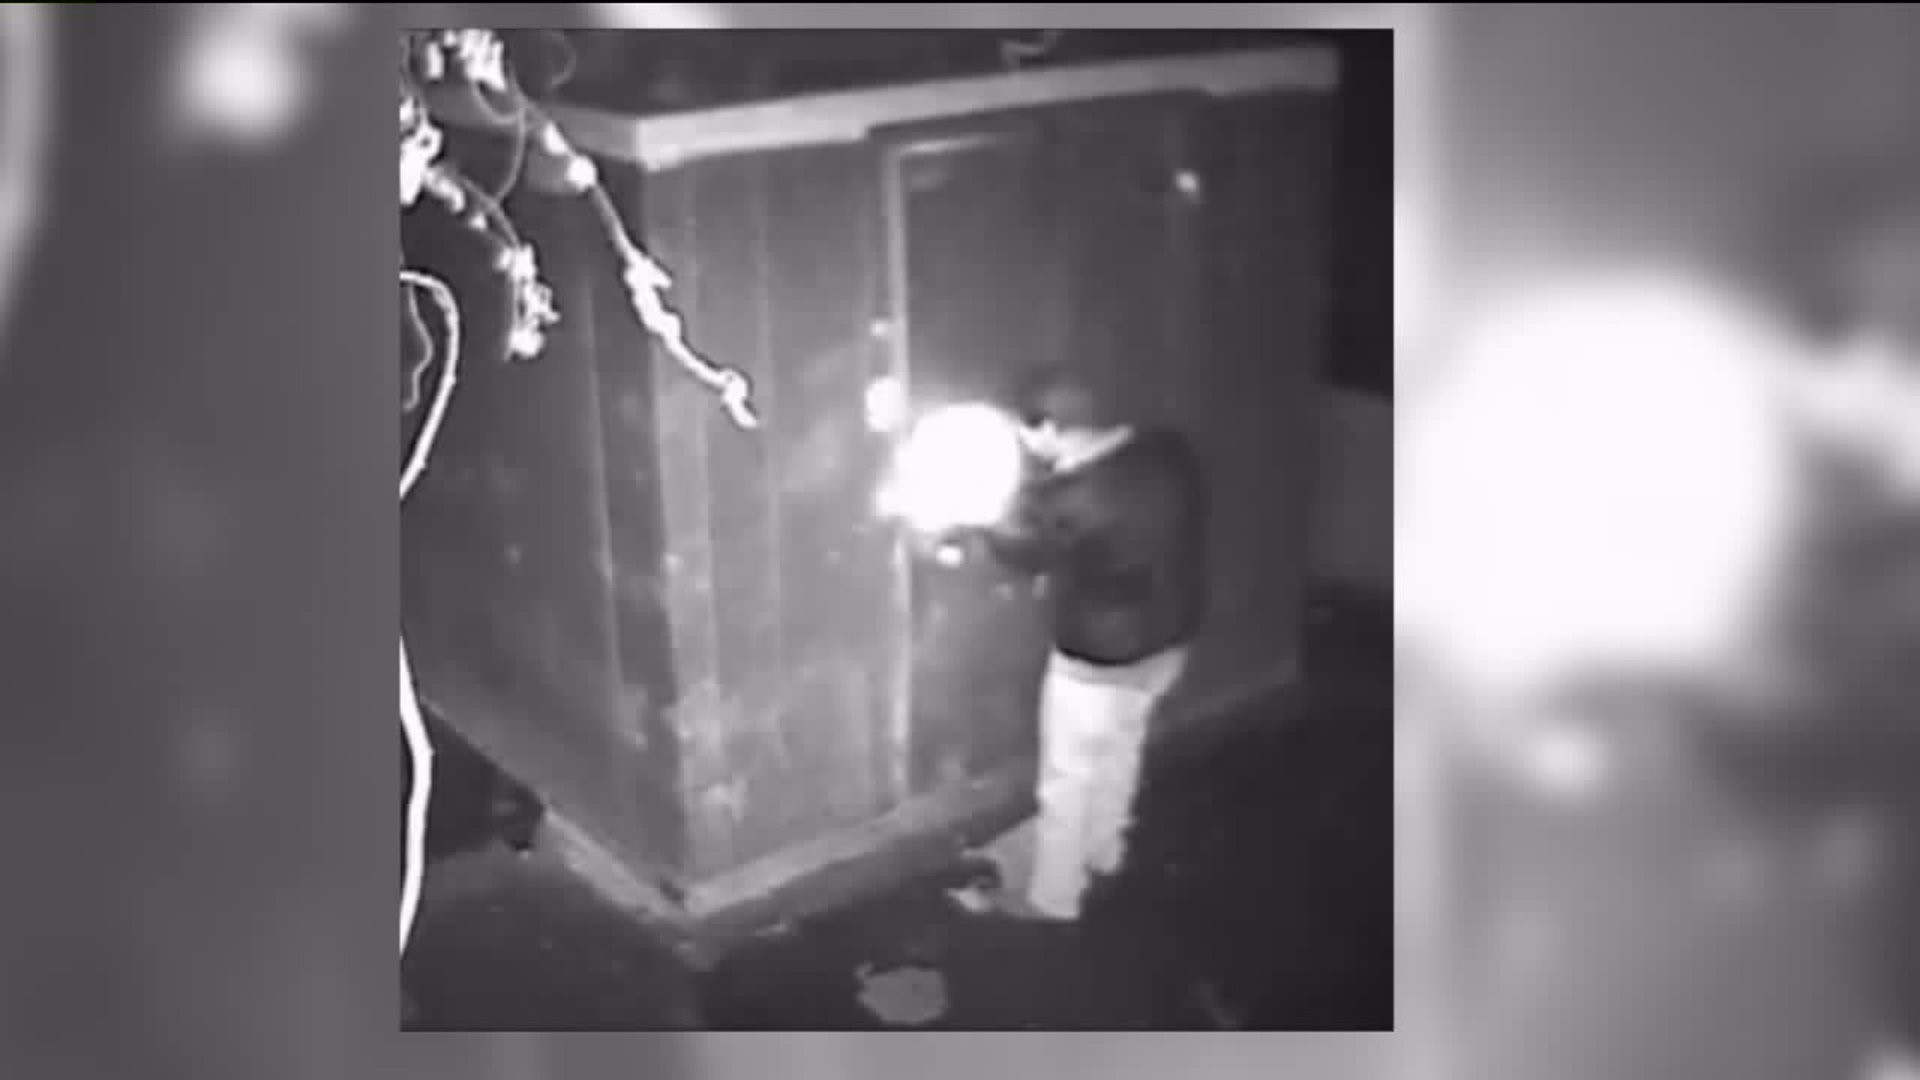 Burglars Caught on Camera Stealing Food from Italian Restaurant in Scranton